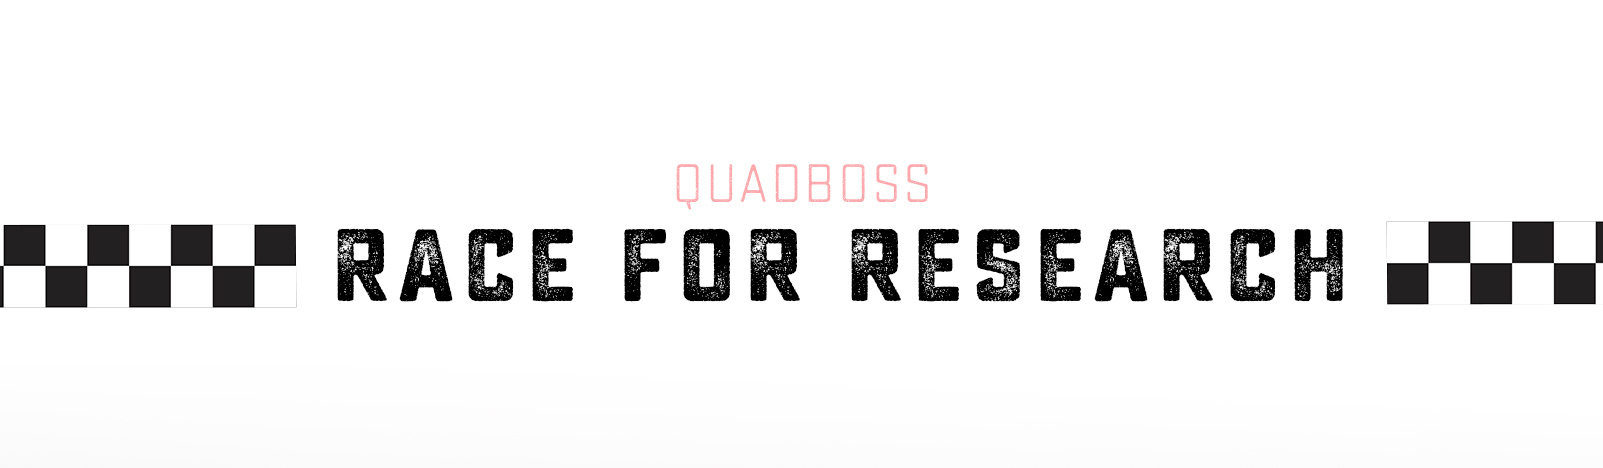 Quadboss Logo - QuadBoss Keep You Riding